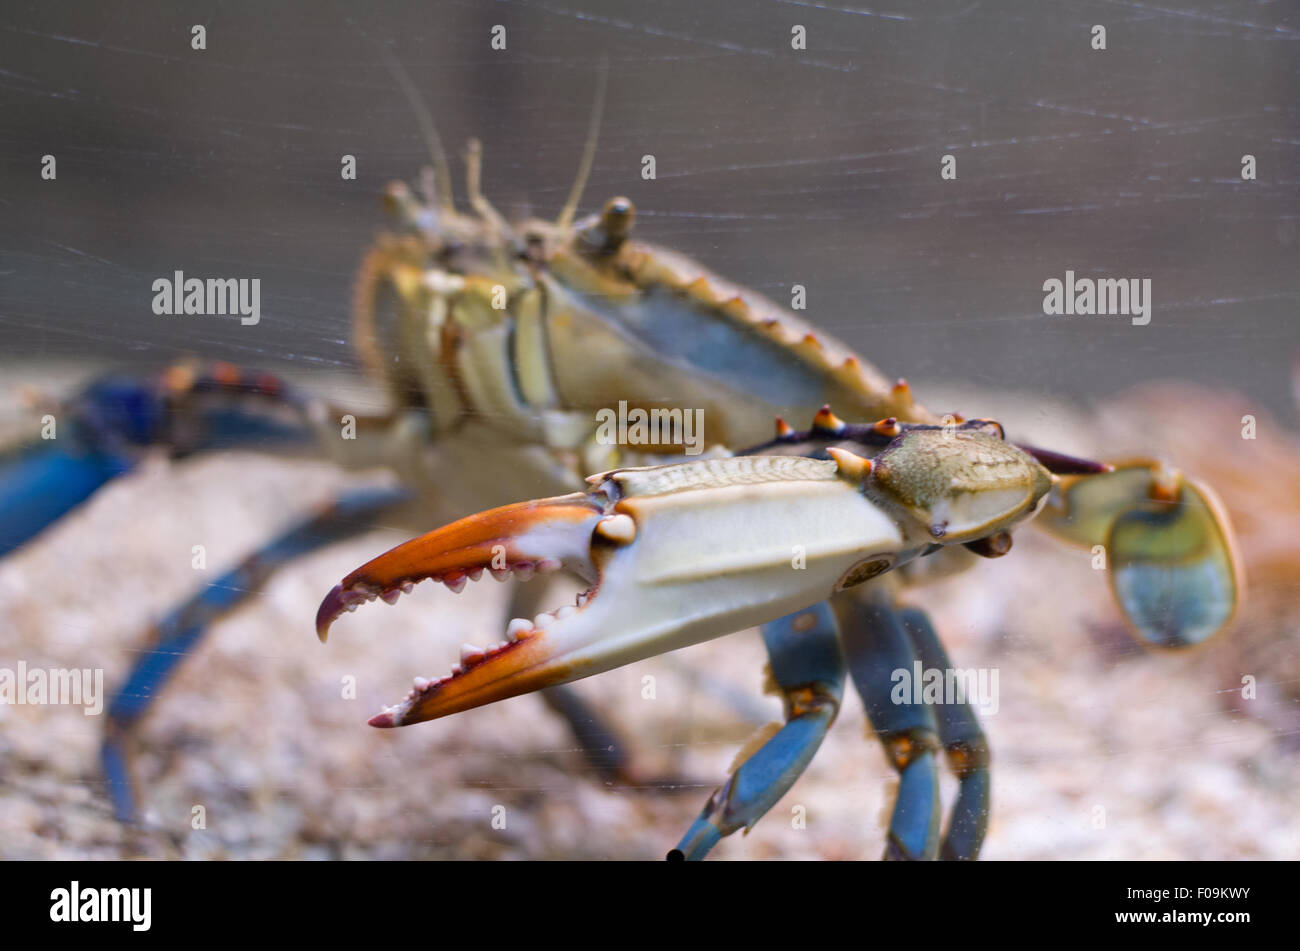 Atlantic Blue Crab mit Orange Zange Seite Closeup und Aquarium Glas zerkratzt Stockfoto